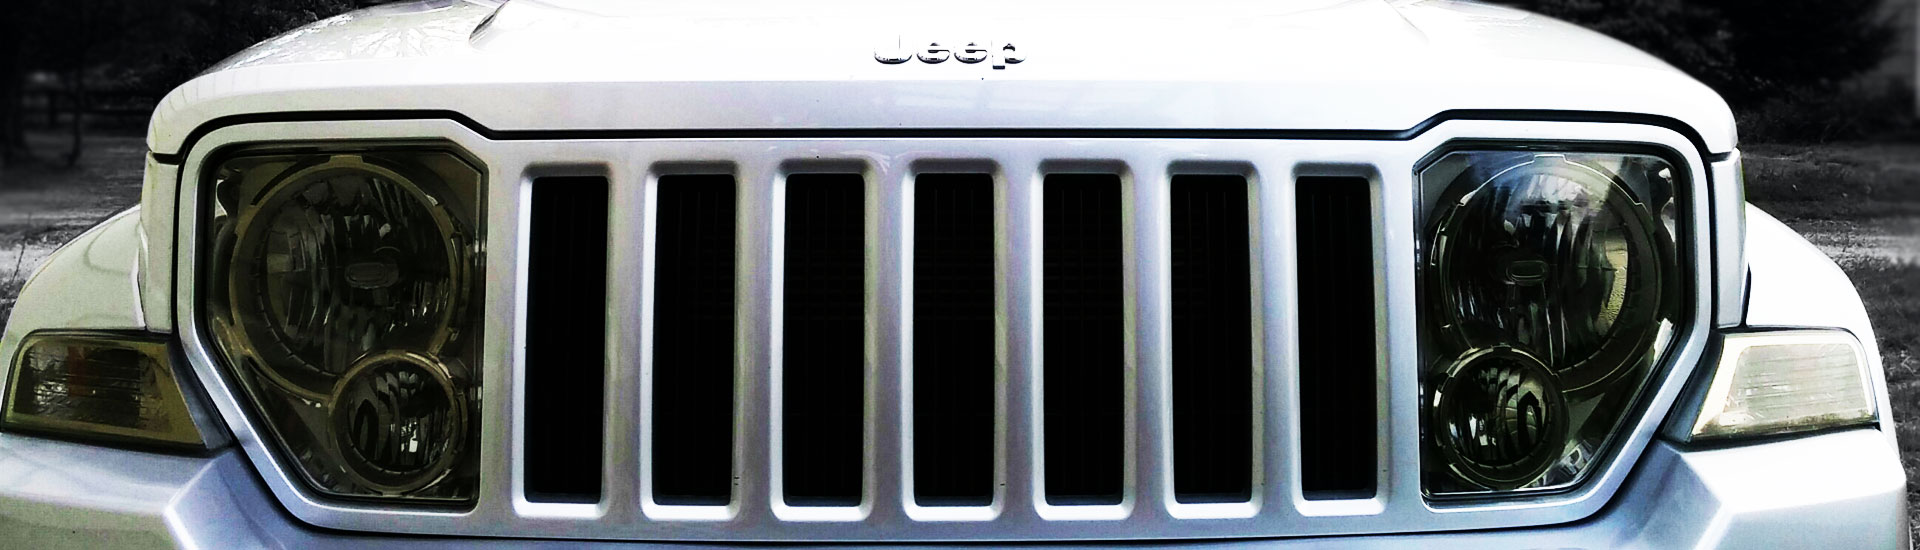 Jeep Liberty Headlight Tint Covers